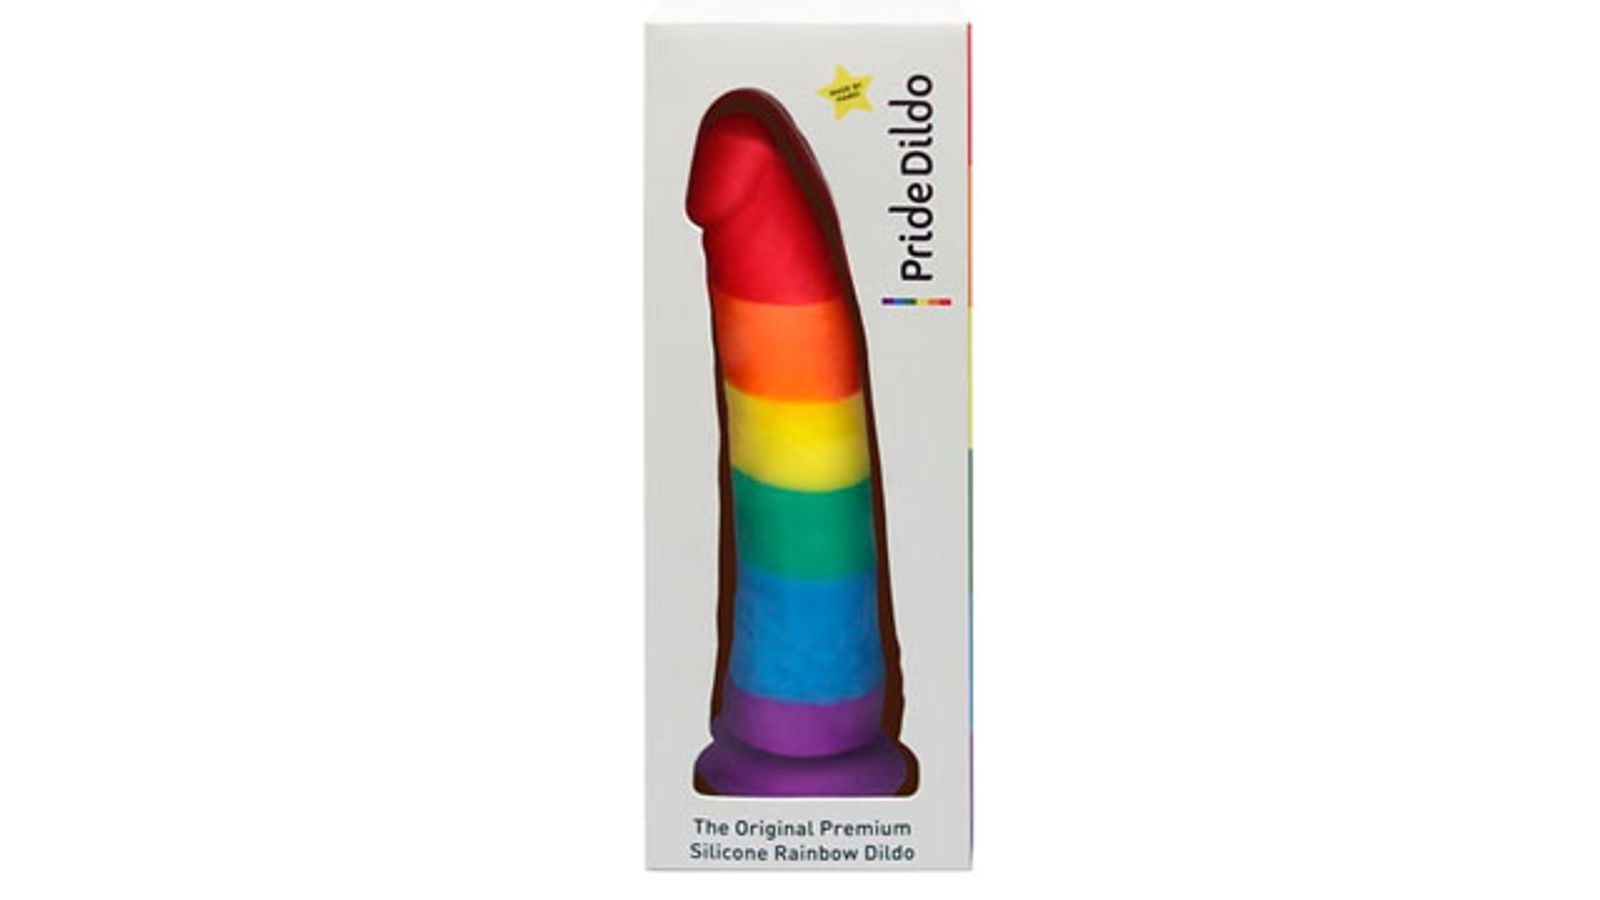 Autoblow 2 Inventor Creates Rainbow Dildo To Celebrate LGBT Pride